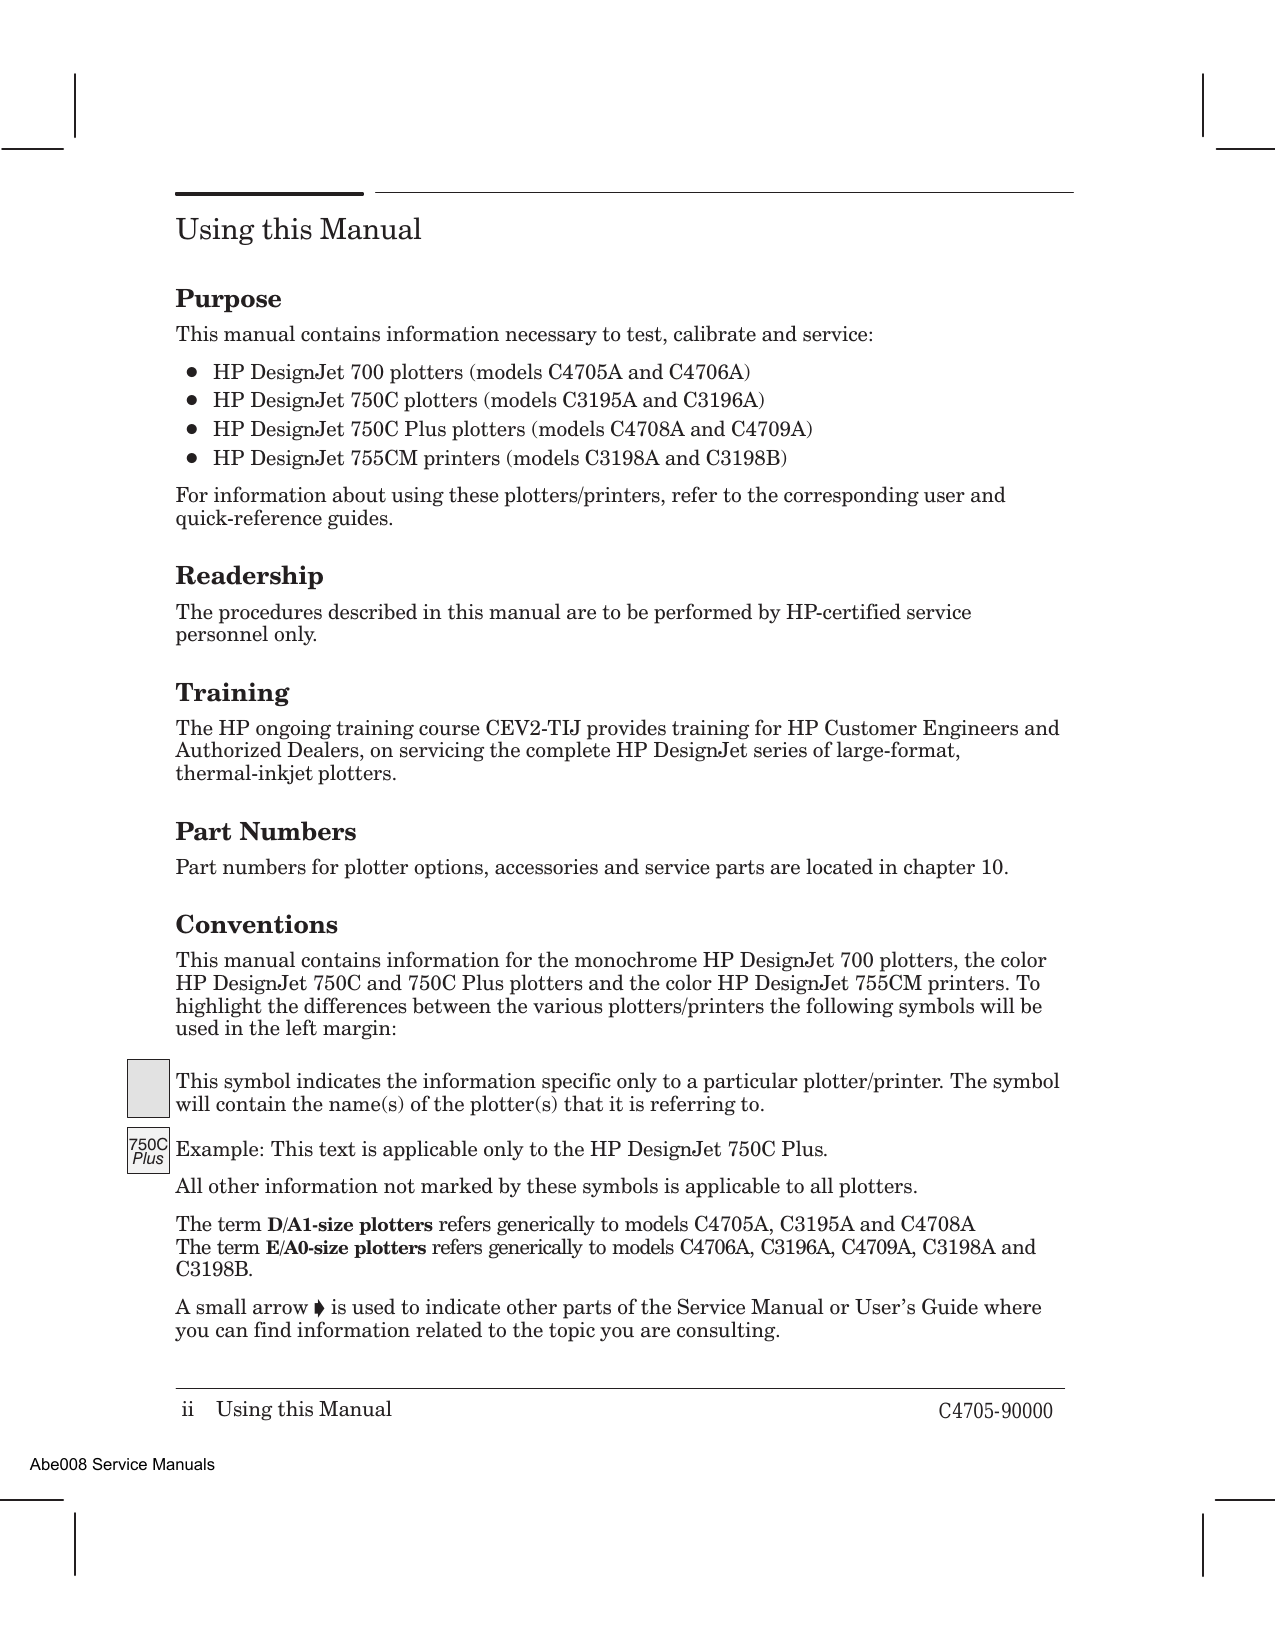 HP Designjet 700, 755, 755CM, 750C, 750C Plus large-format printer service guide Preview image 3